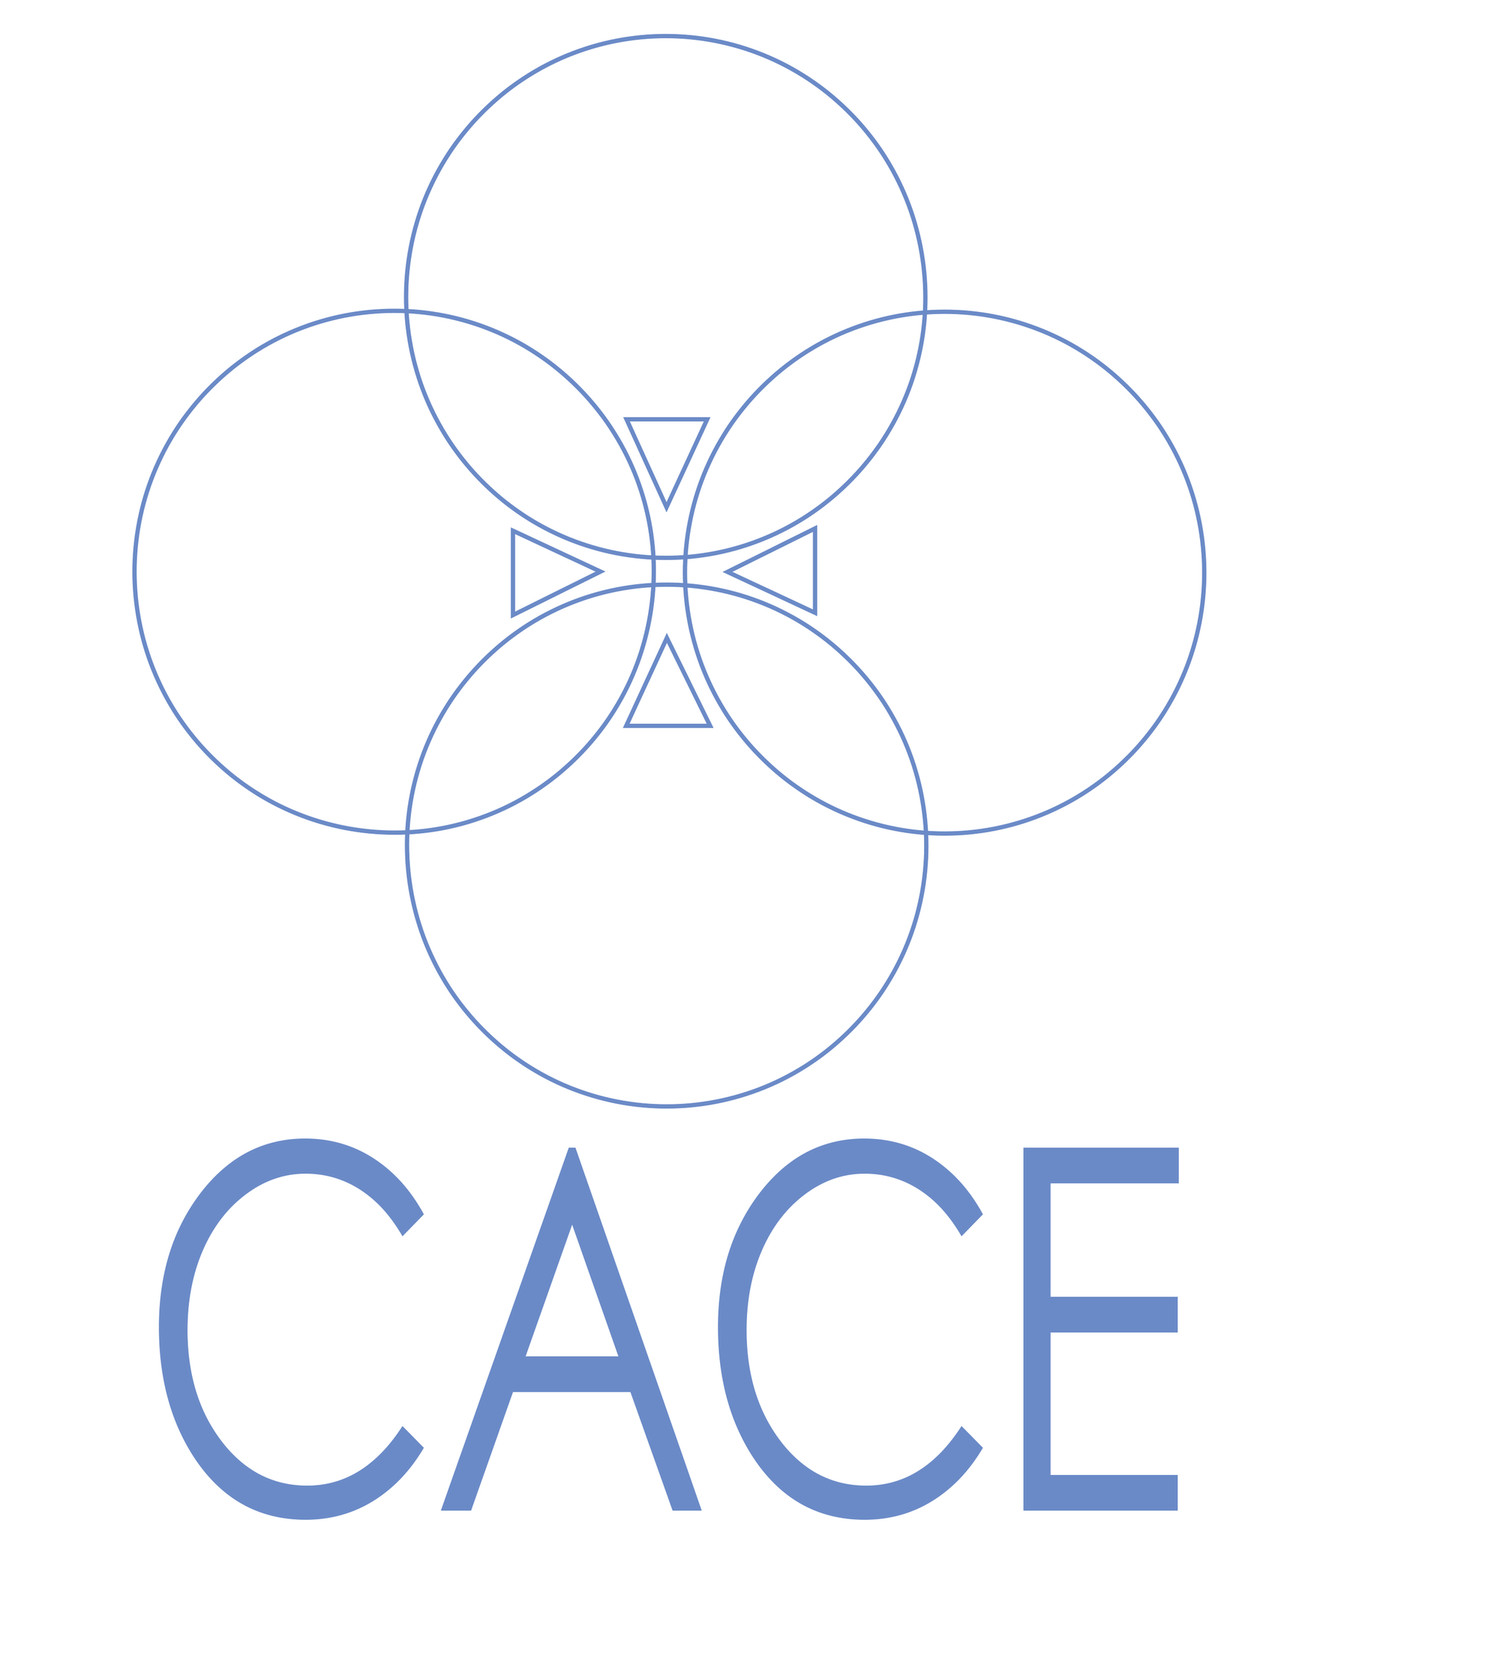 CACE-logo.jpg